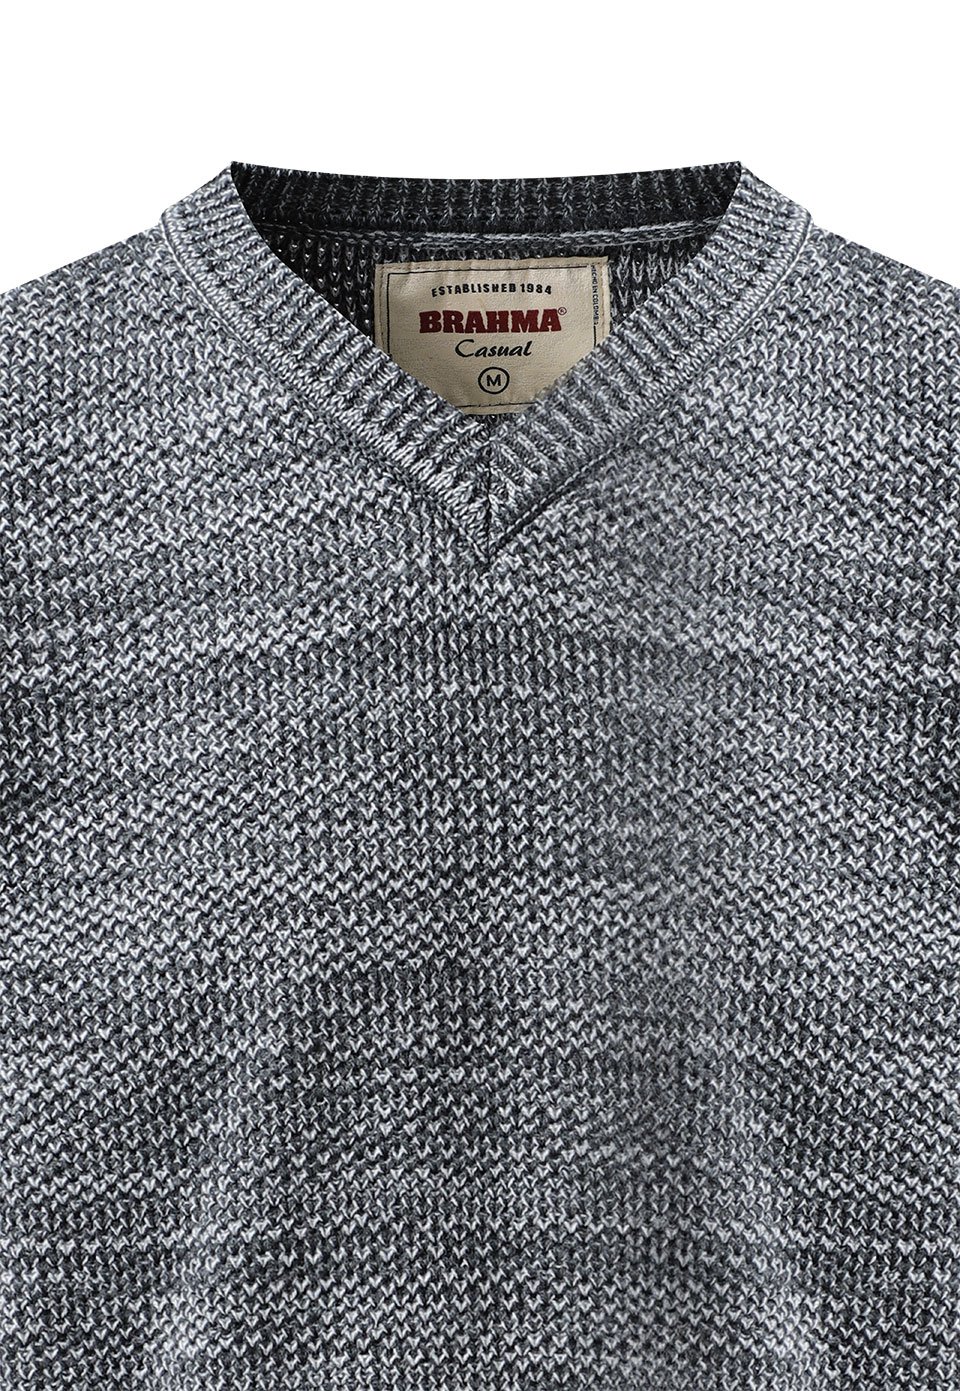 Brahma - Página Oficial - SWE0101-GRI Sweater Hombre